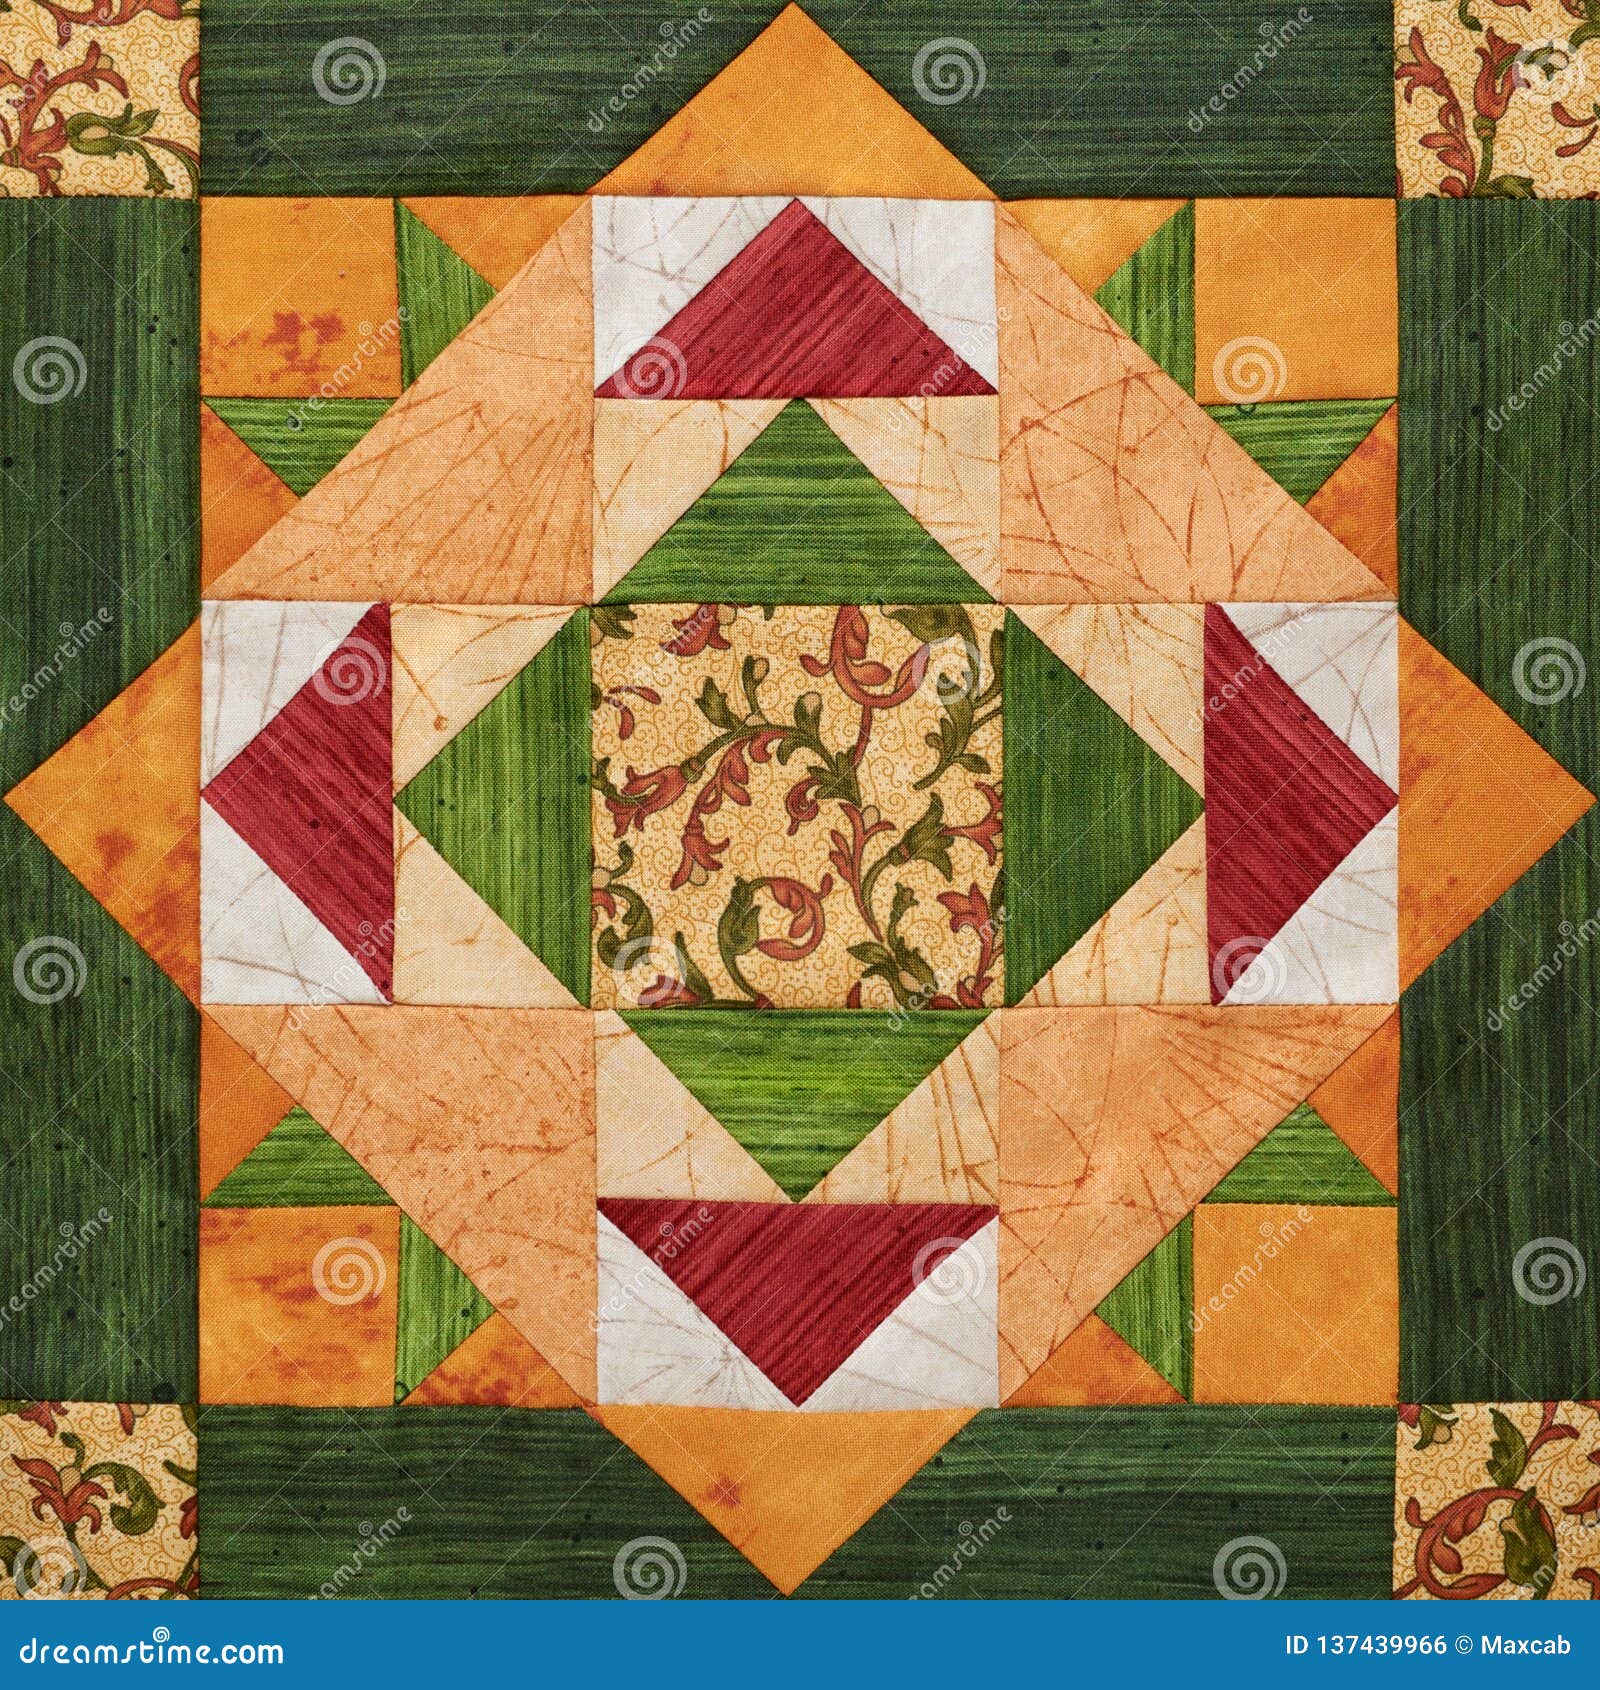 bright orange-green geometric patchwork block from pieces of fabrics